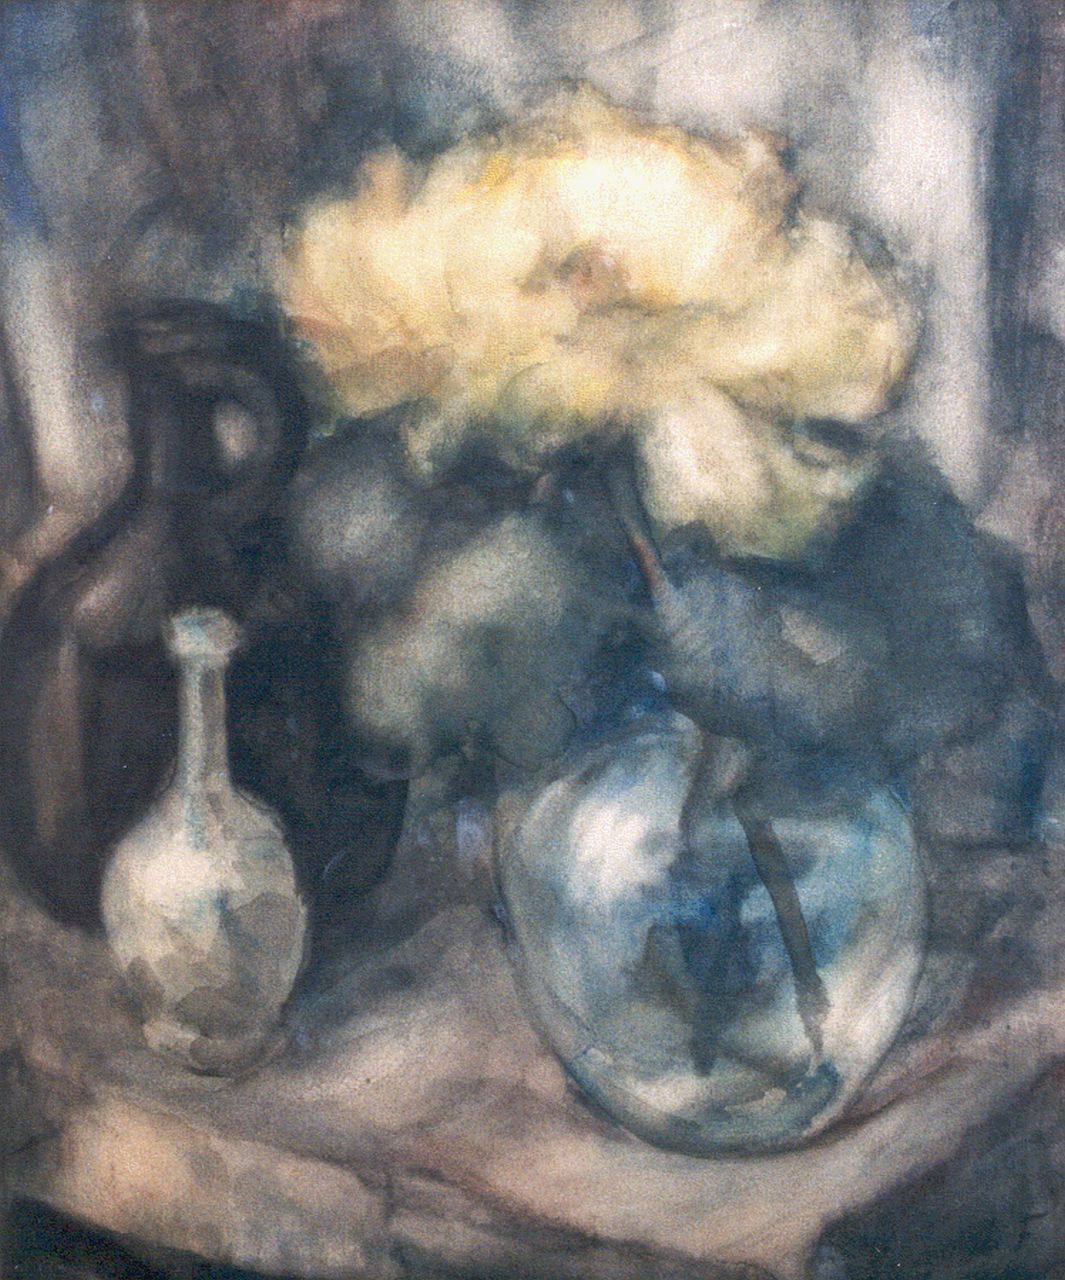 Fauconnier H.V.G. Le | 'Henri' Victor Gabriel Le Fauconnier, Stilleven met dahlia in een vaas, aquarel op papier 48,8 x 42,6 cm, gesigneerd rechtsonder met initialen